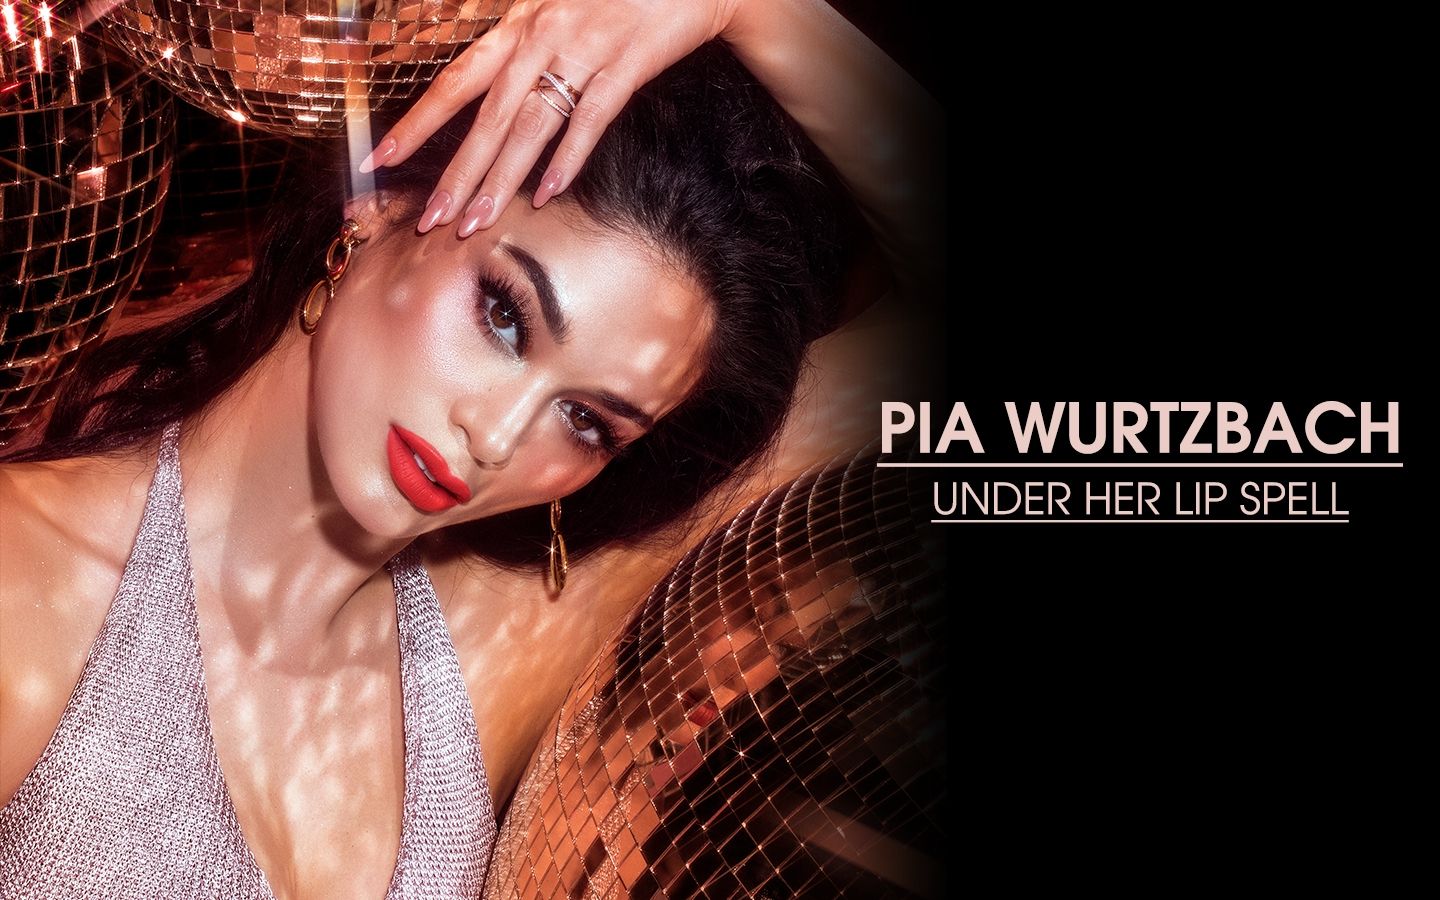 EXCLUSIVE: Pia Wurtzbach Collaborates With Teviant For A Lipstick